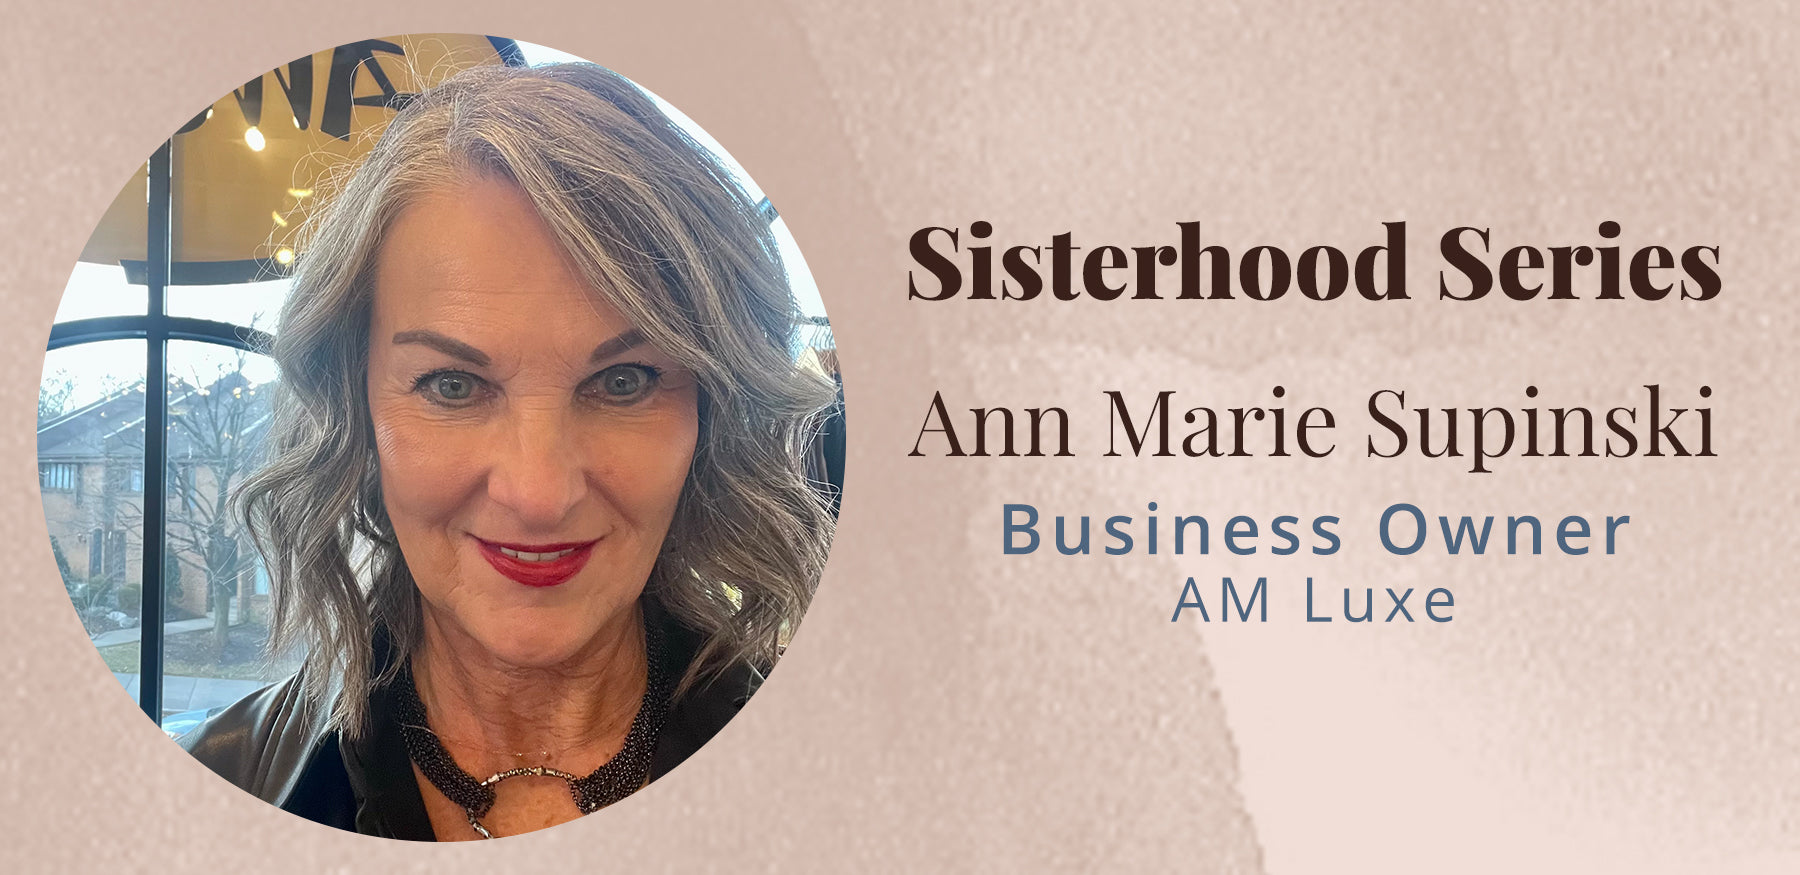 Sisterhood Series with Ann Marie Supinski